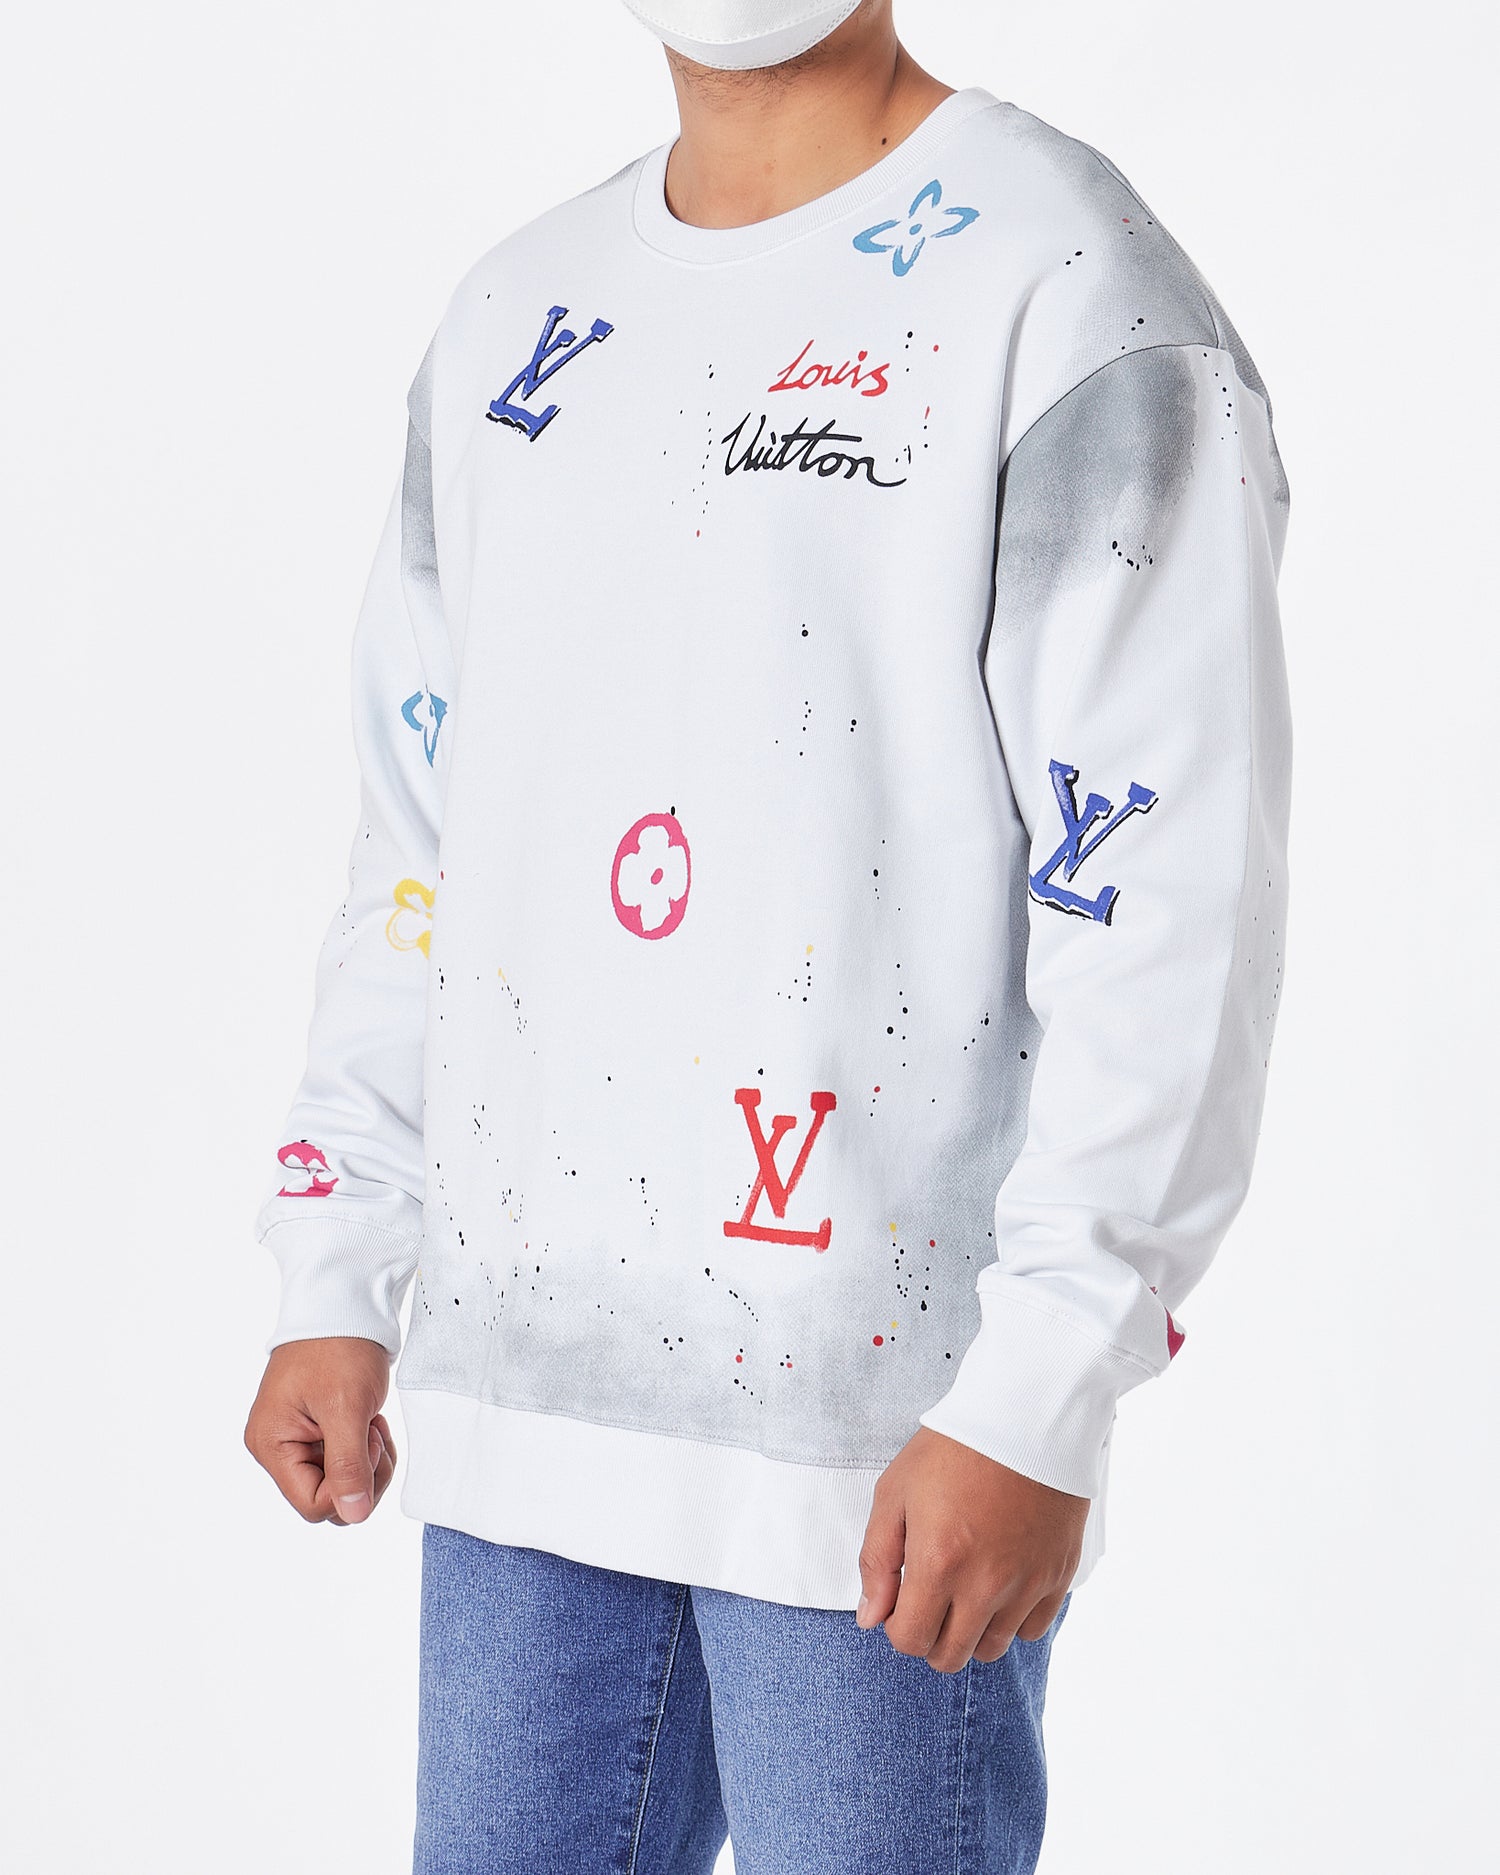 LV Color Monogram Men White Sweater 37.90